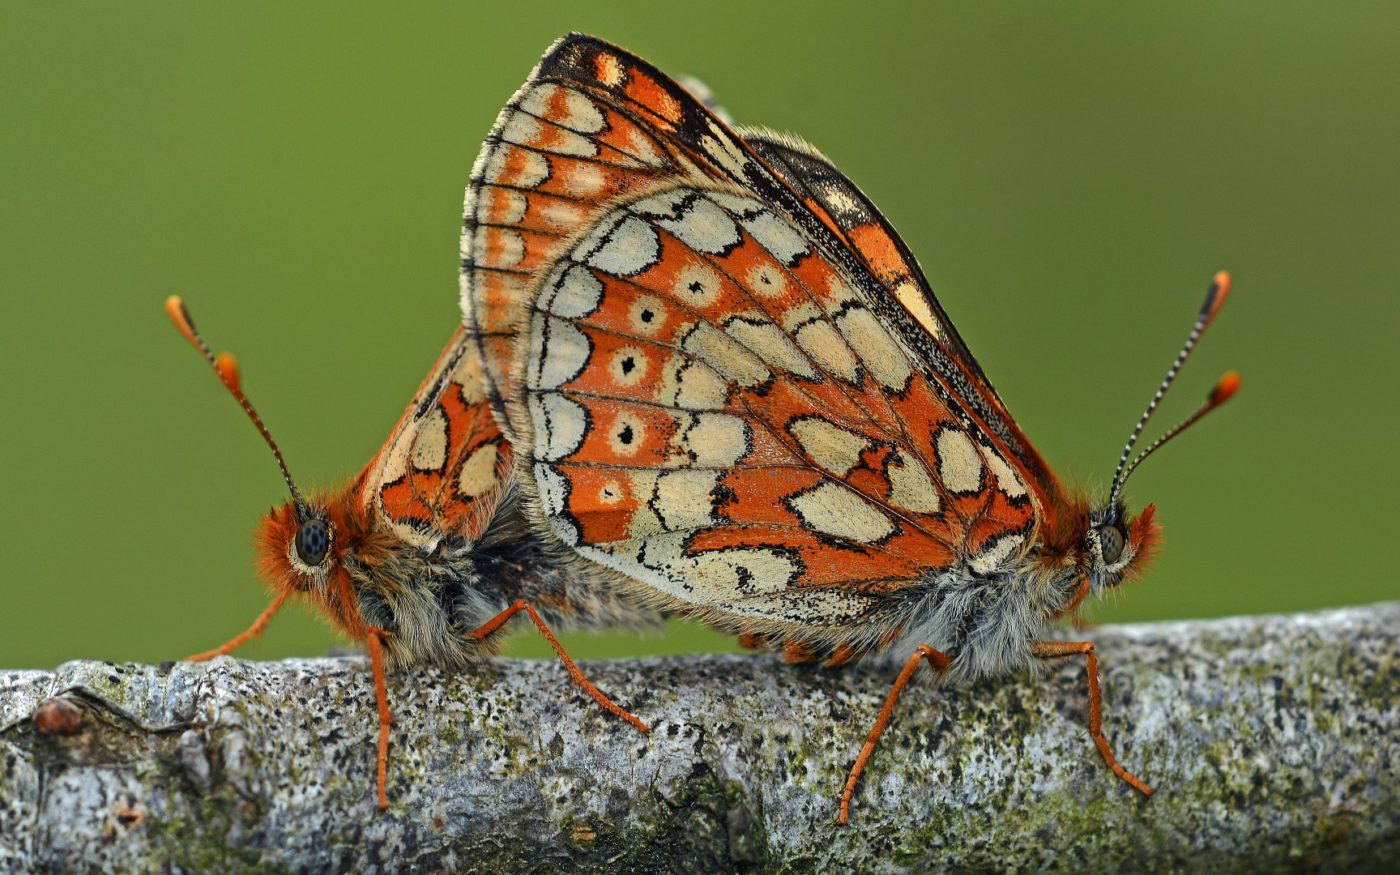 Two Marsh Fritillary butterflies, Euphydryas aurinia, on a twig